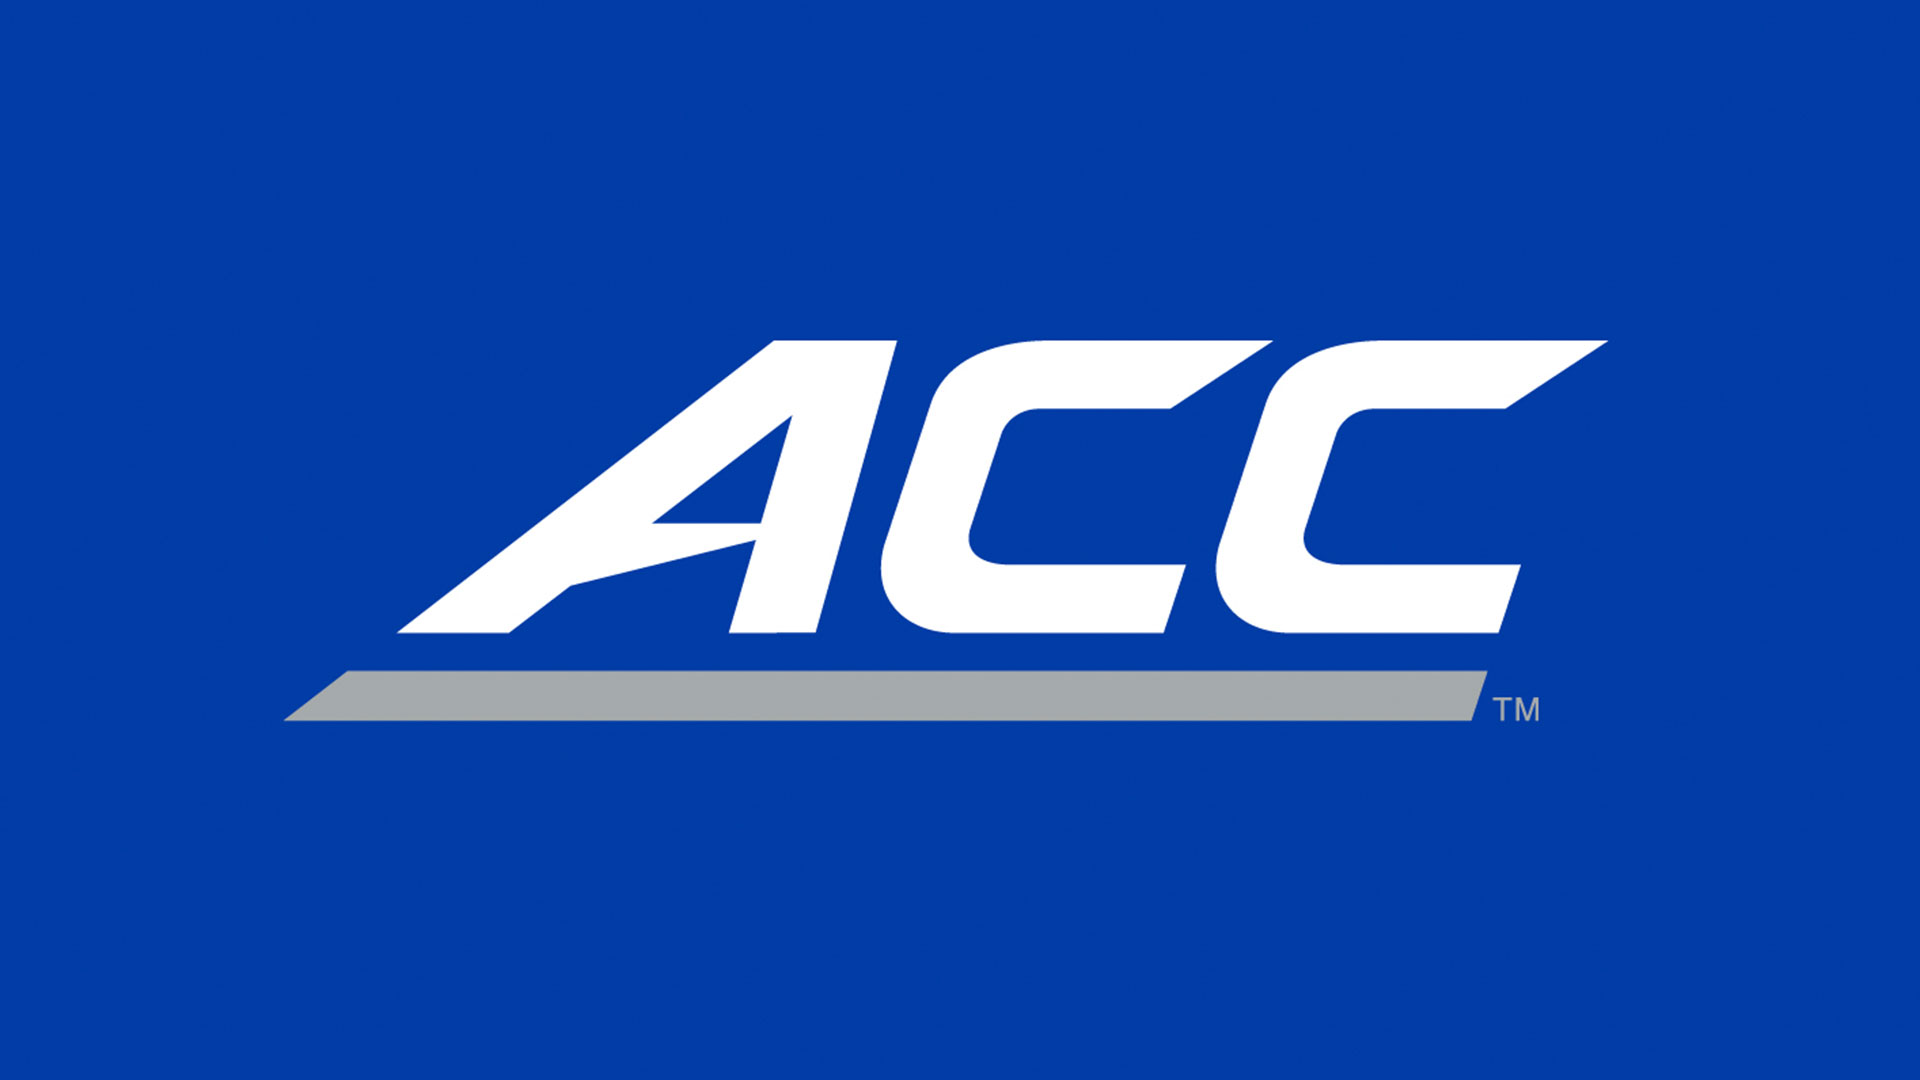 Atlantic Coast Conference logo